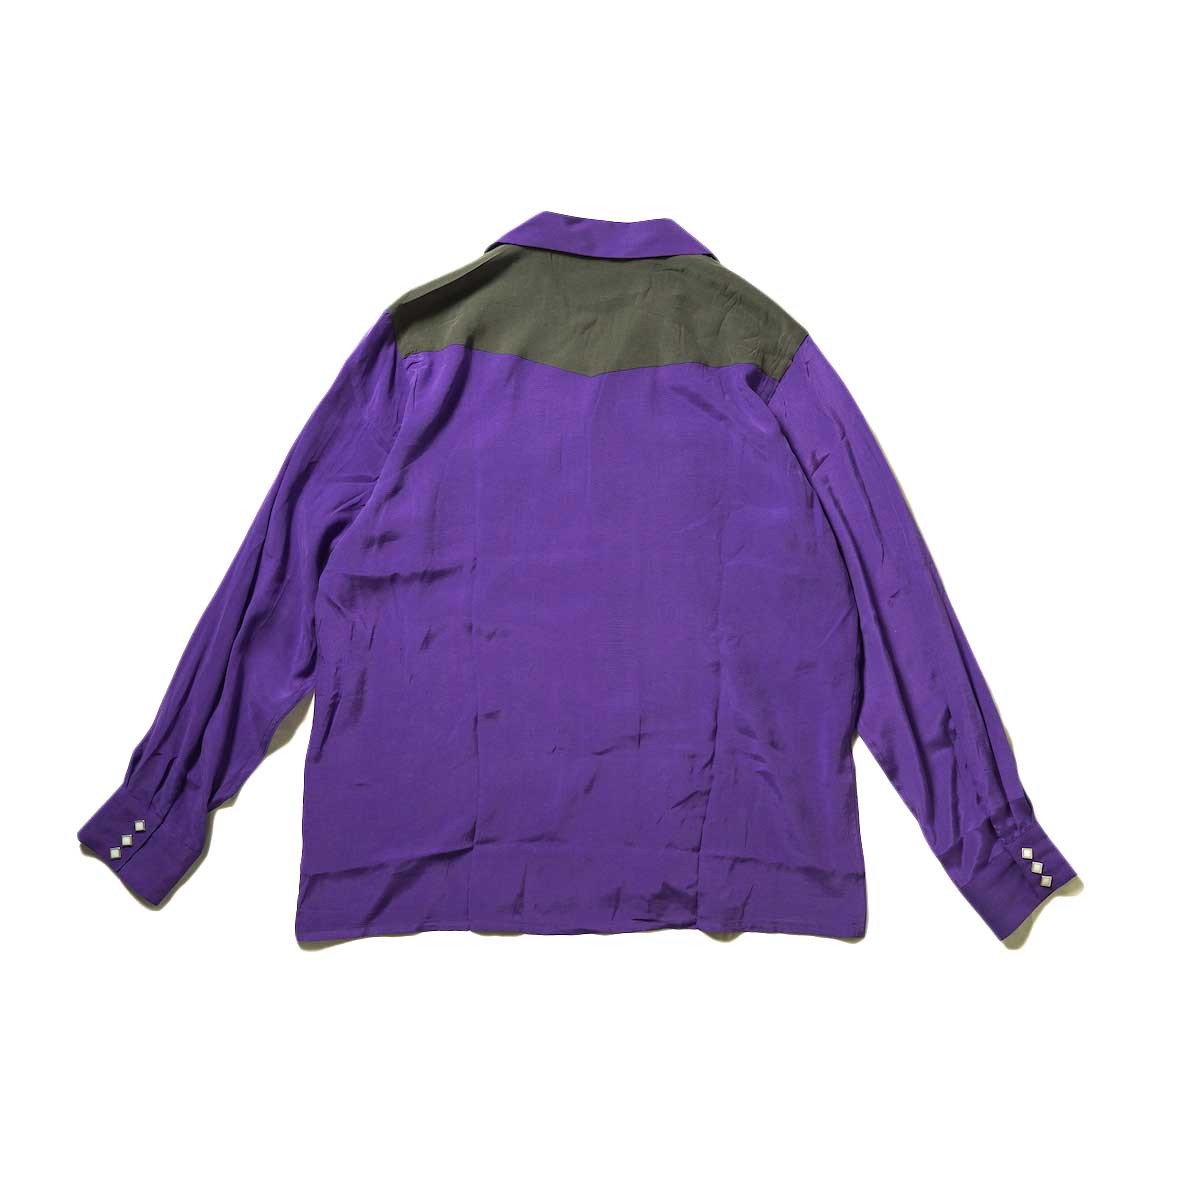 Needles / COWBOY CLASSIC SHIRT - CU/R SATEEN (Purple)背面